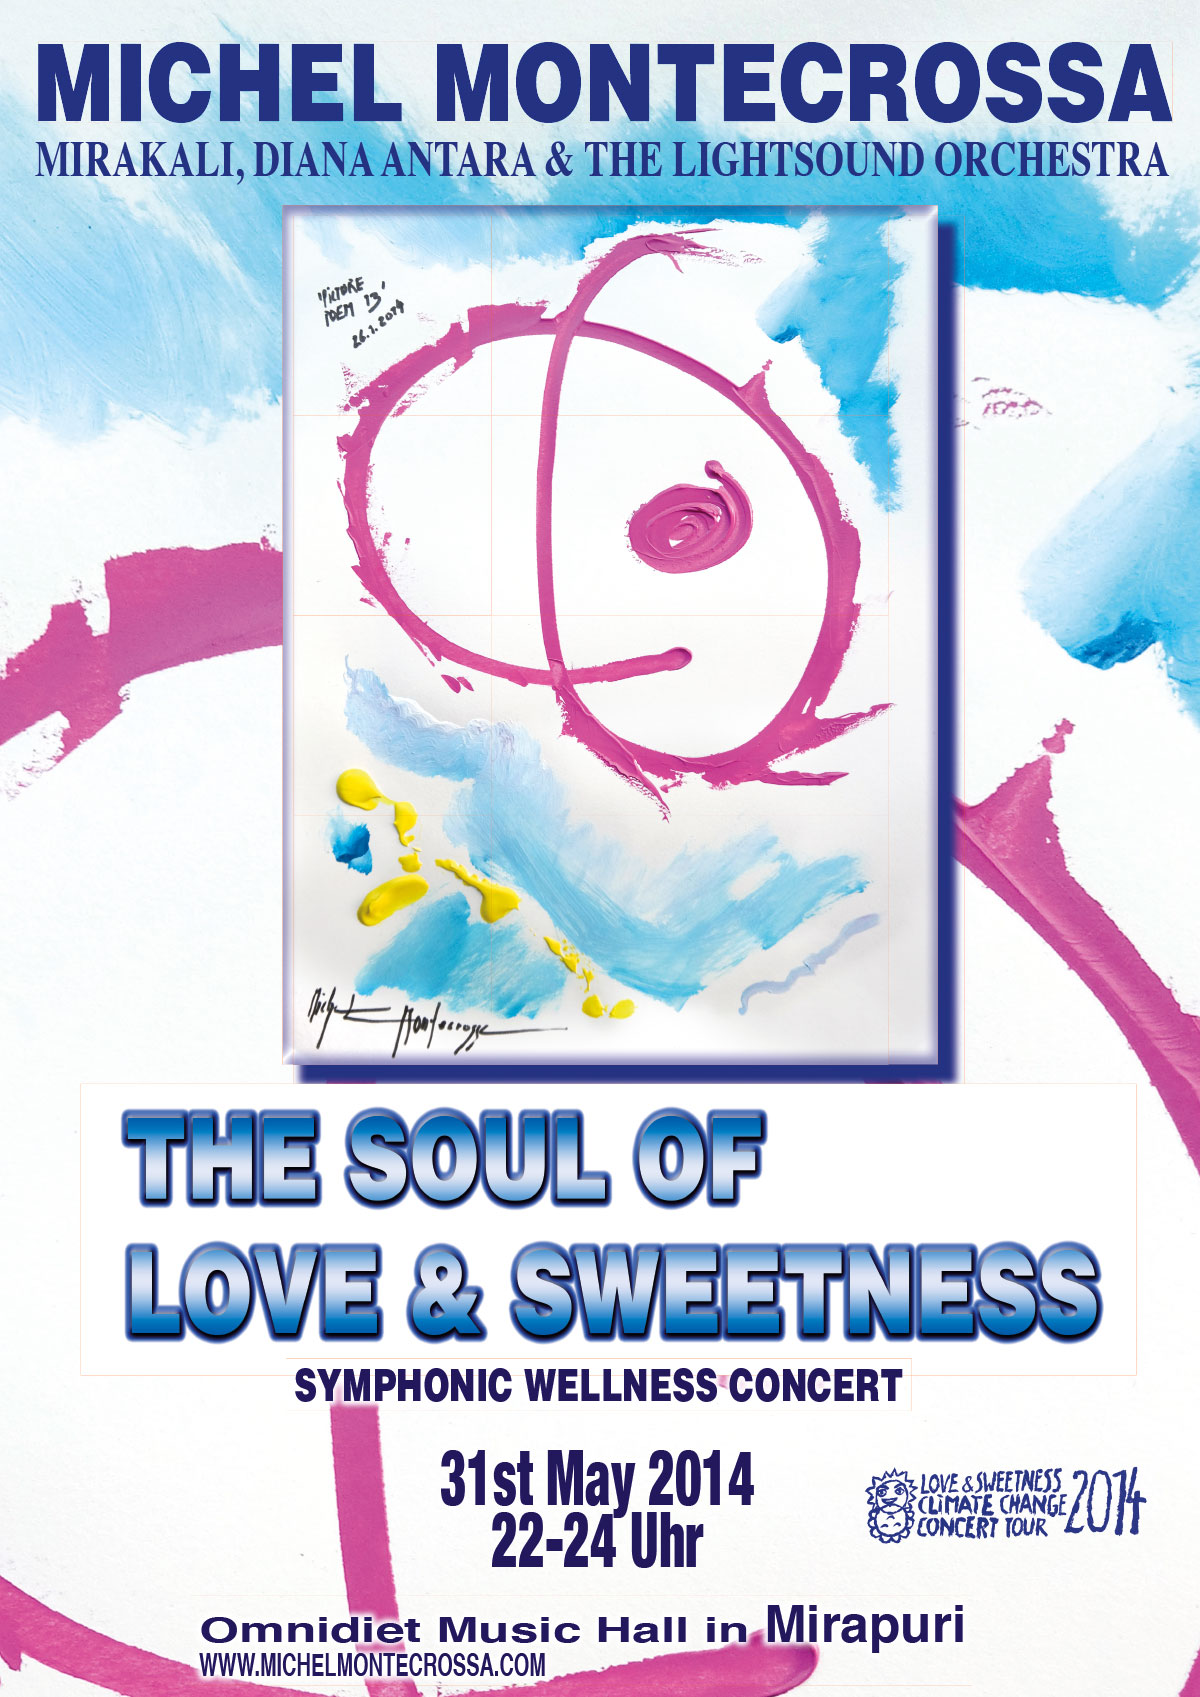 The Soul Of Love & Sweetness Symphonic Wellness Concert